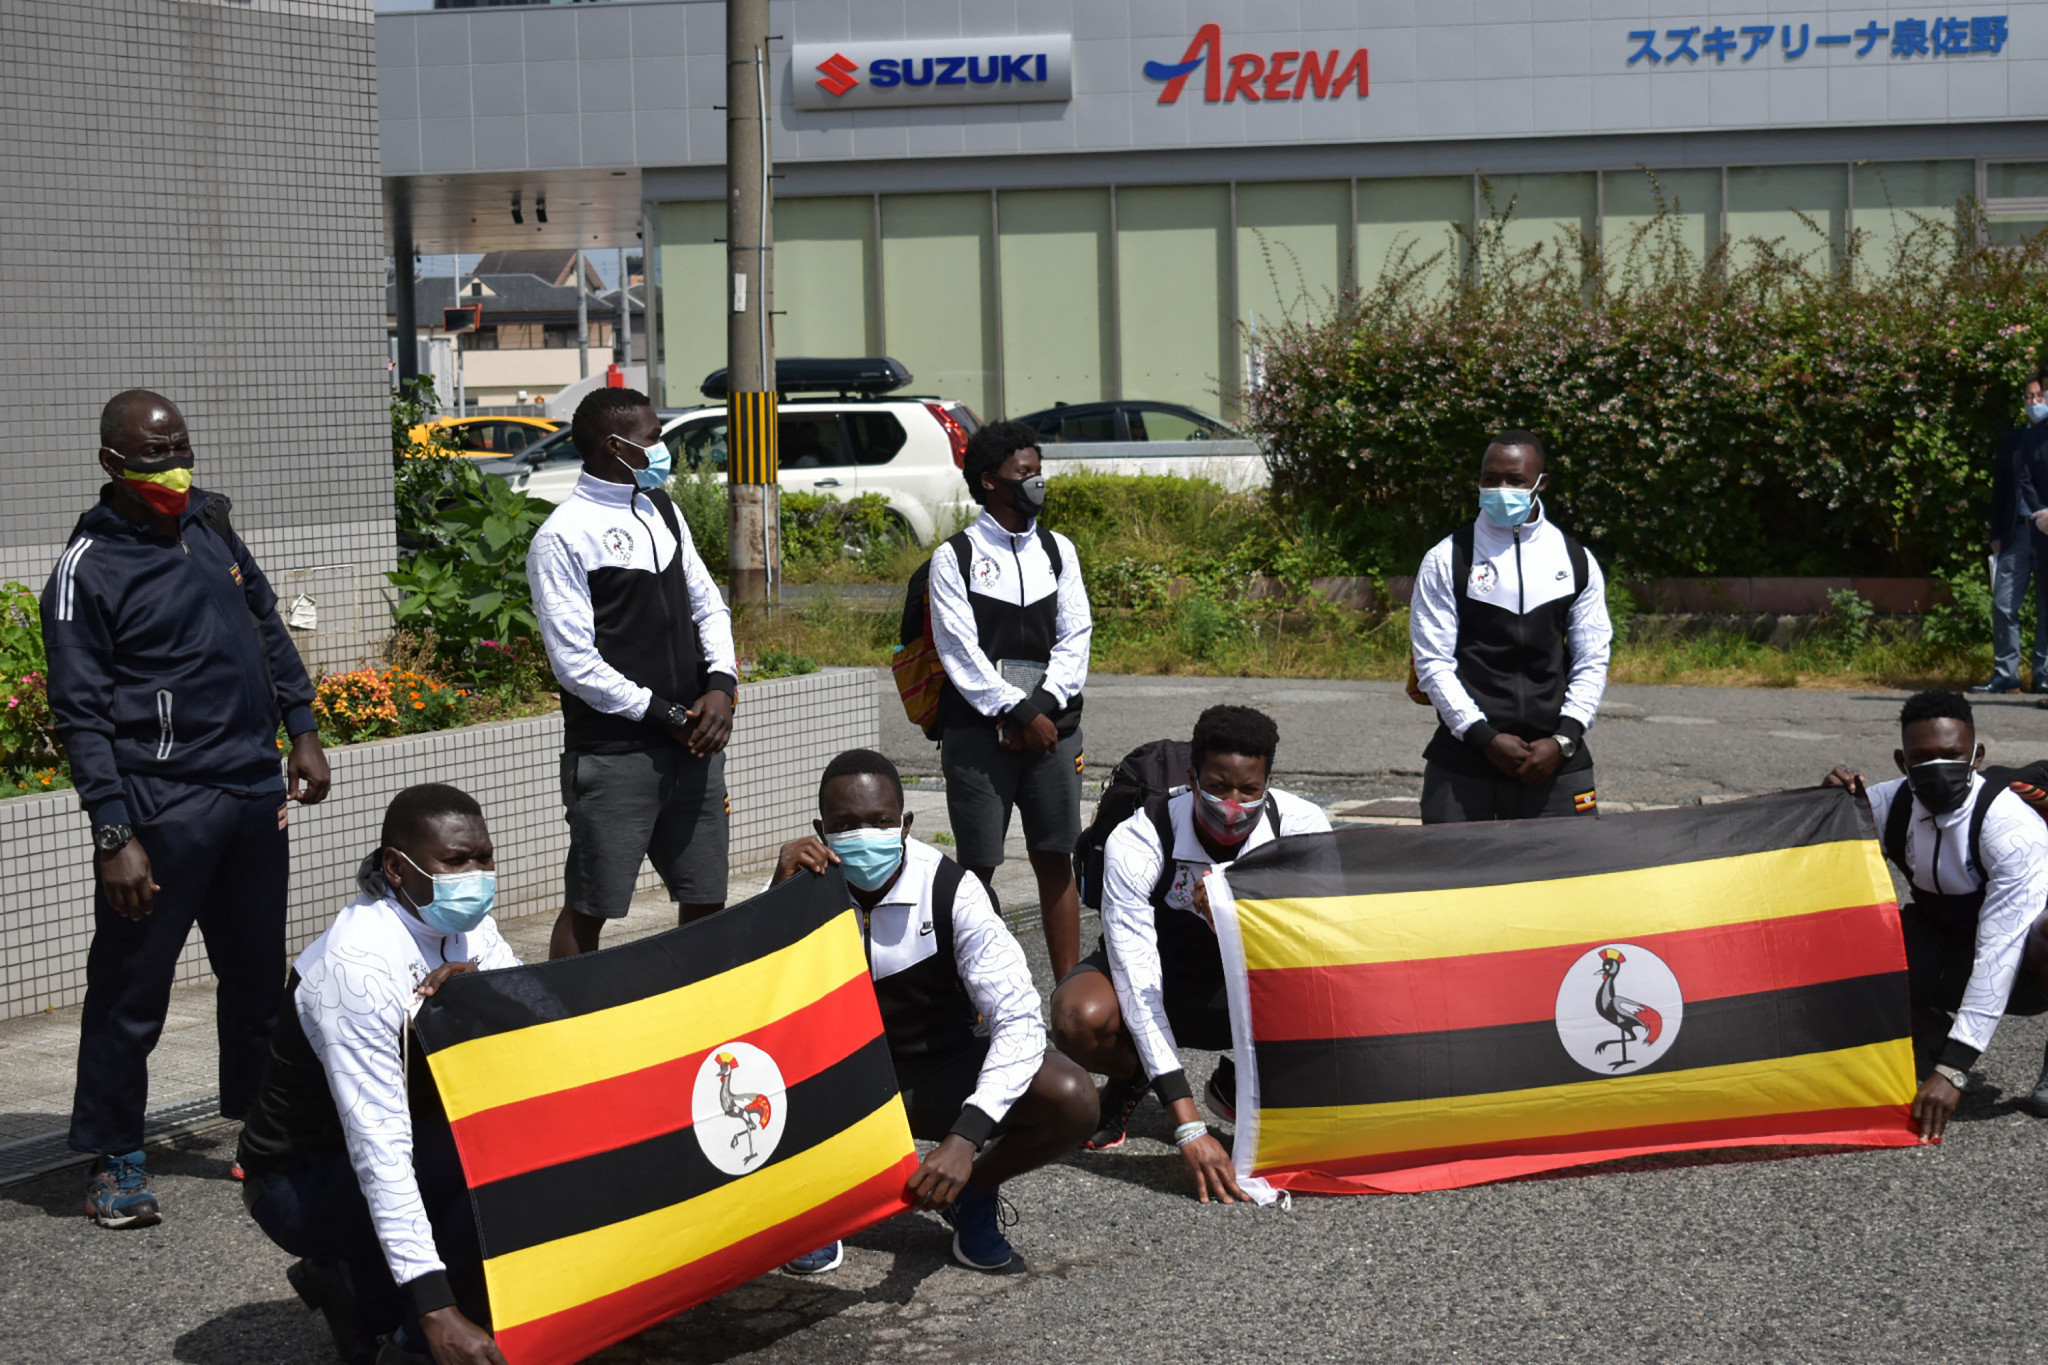 Tokyo 2020 eye tighter rules on arrivals after Ugandan COVID-19 positives 